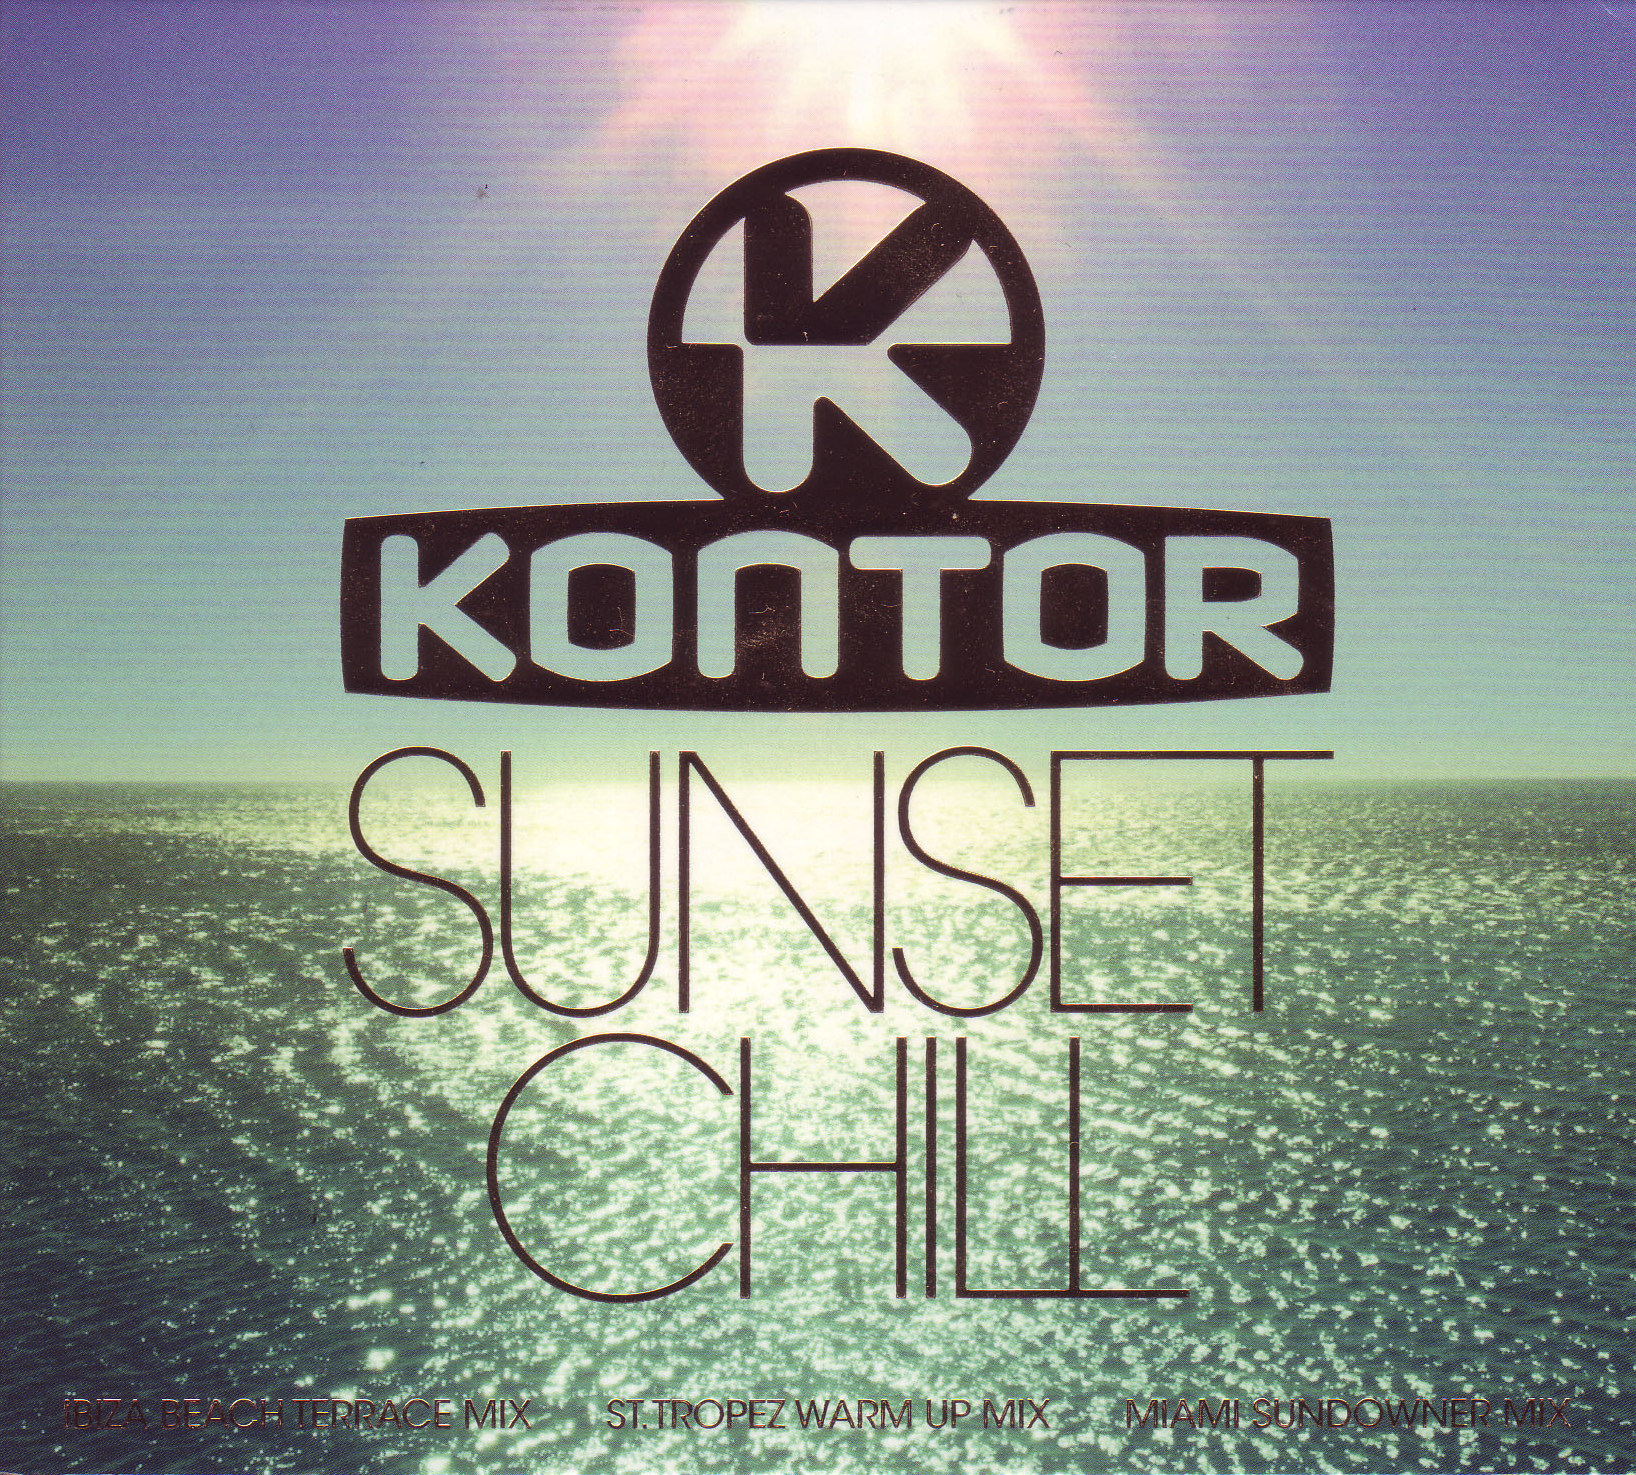 Release “Kontor: Sunset Chill” by Artists MusicBrainz